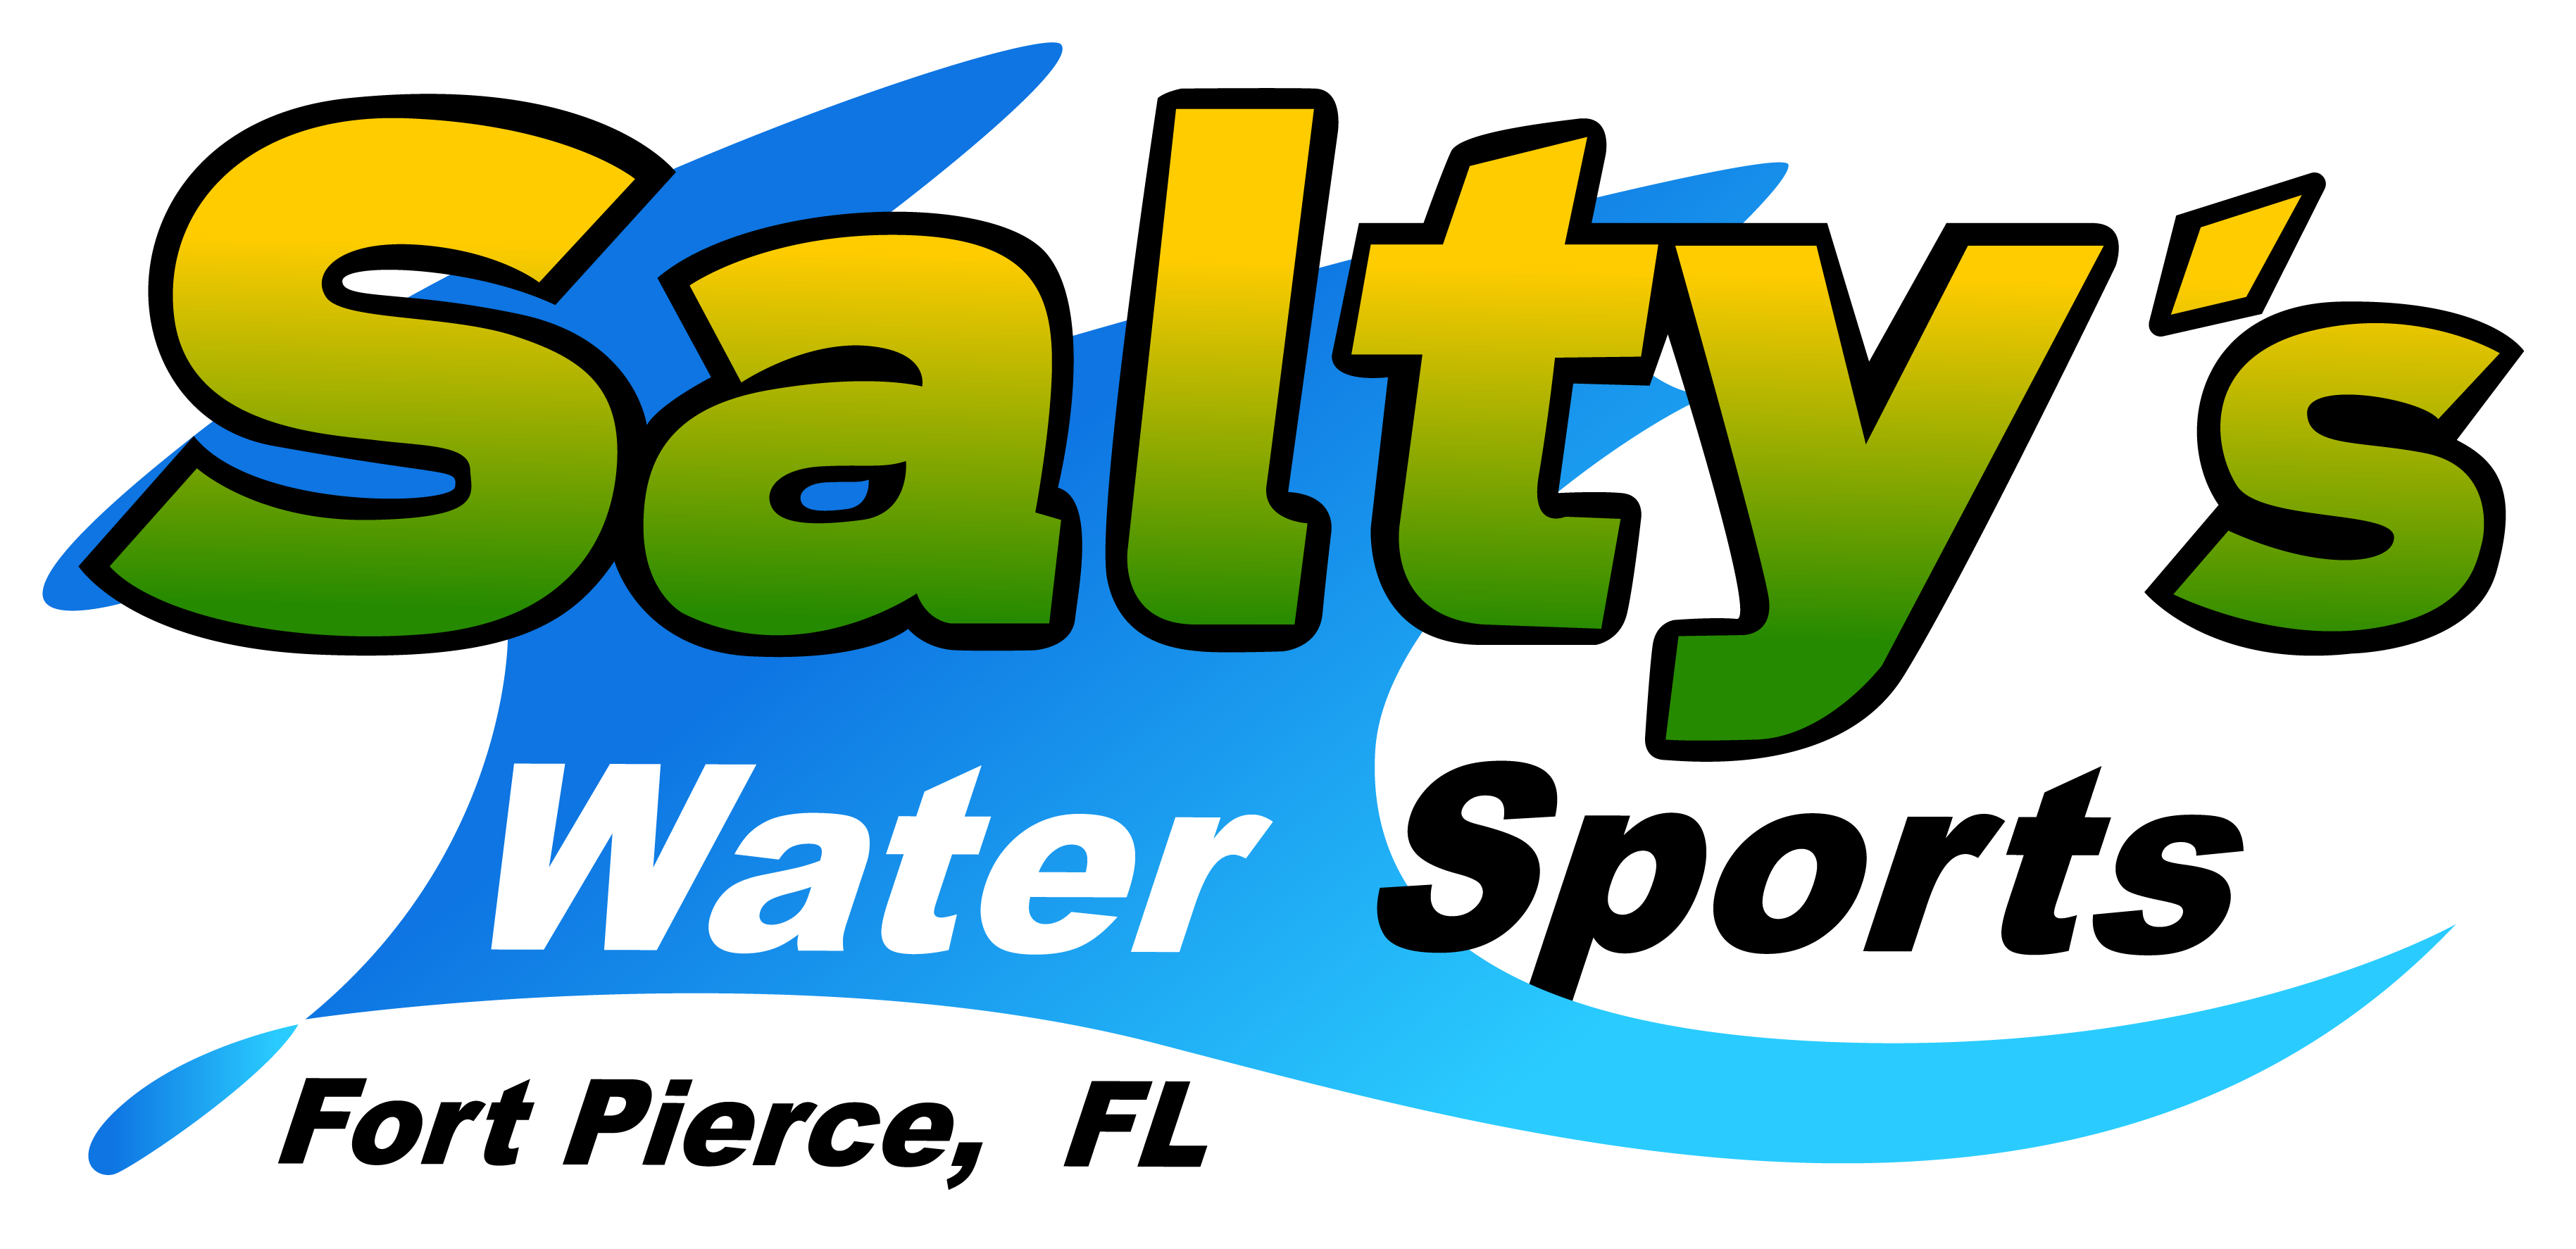 Saltys-Water-Sports-Boat-Jet-Ski-Rentals-Logo.png